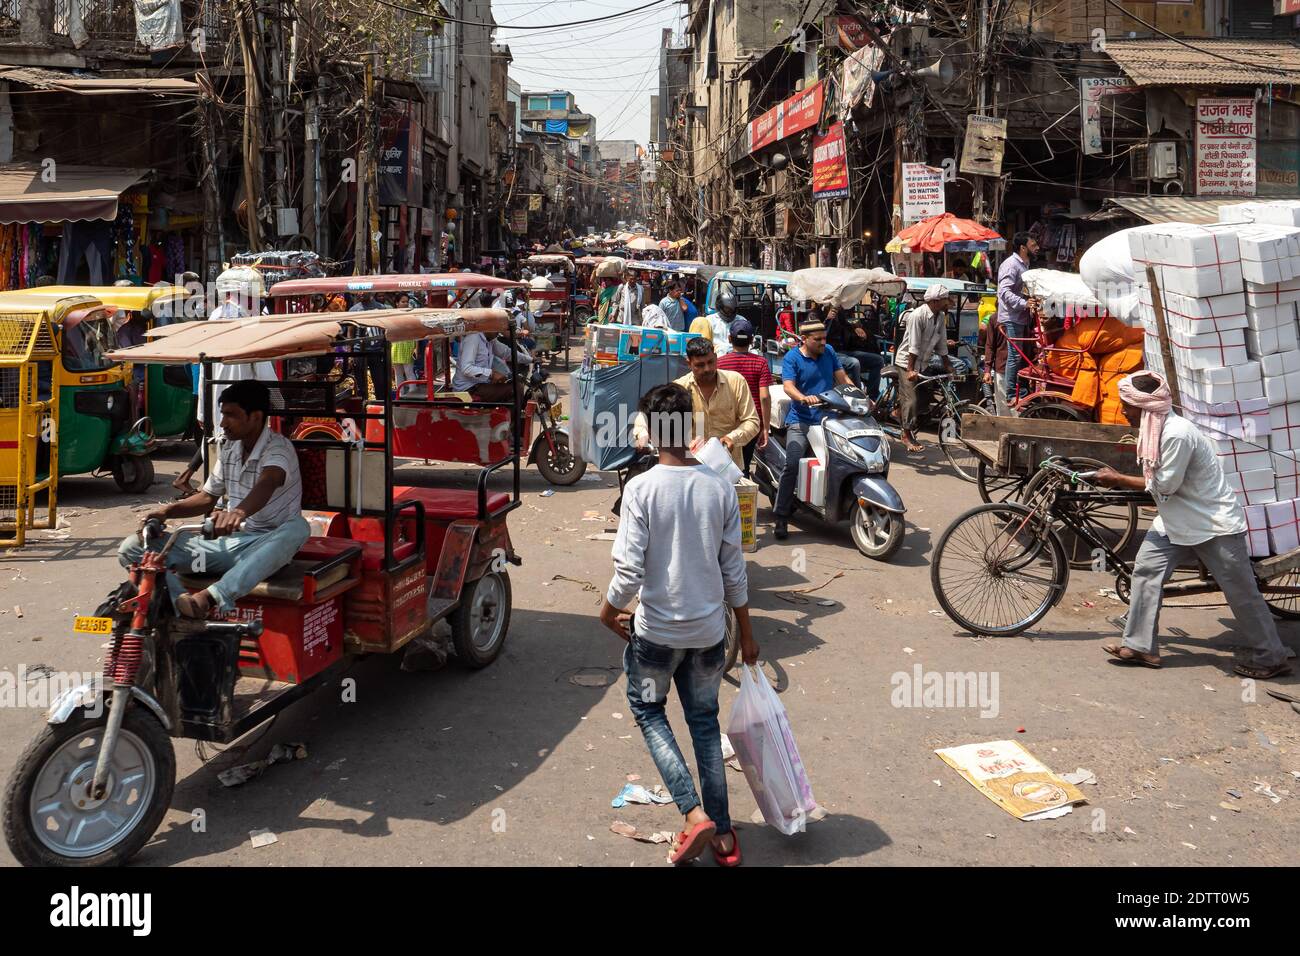 Old Delhi - Chandni chowk crowded. India 2019 Stock Photo